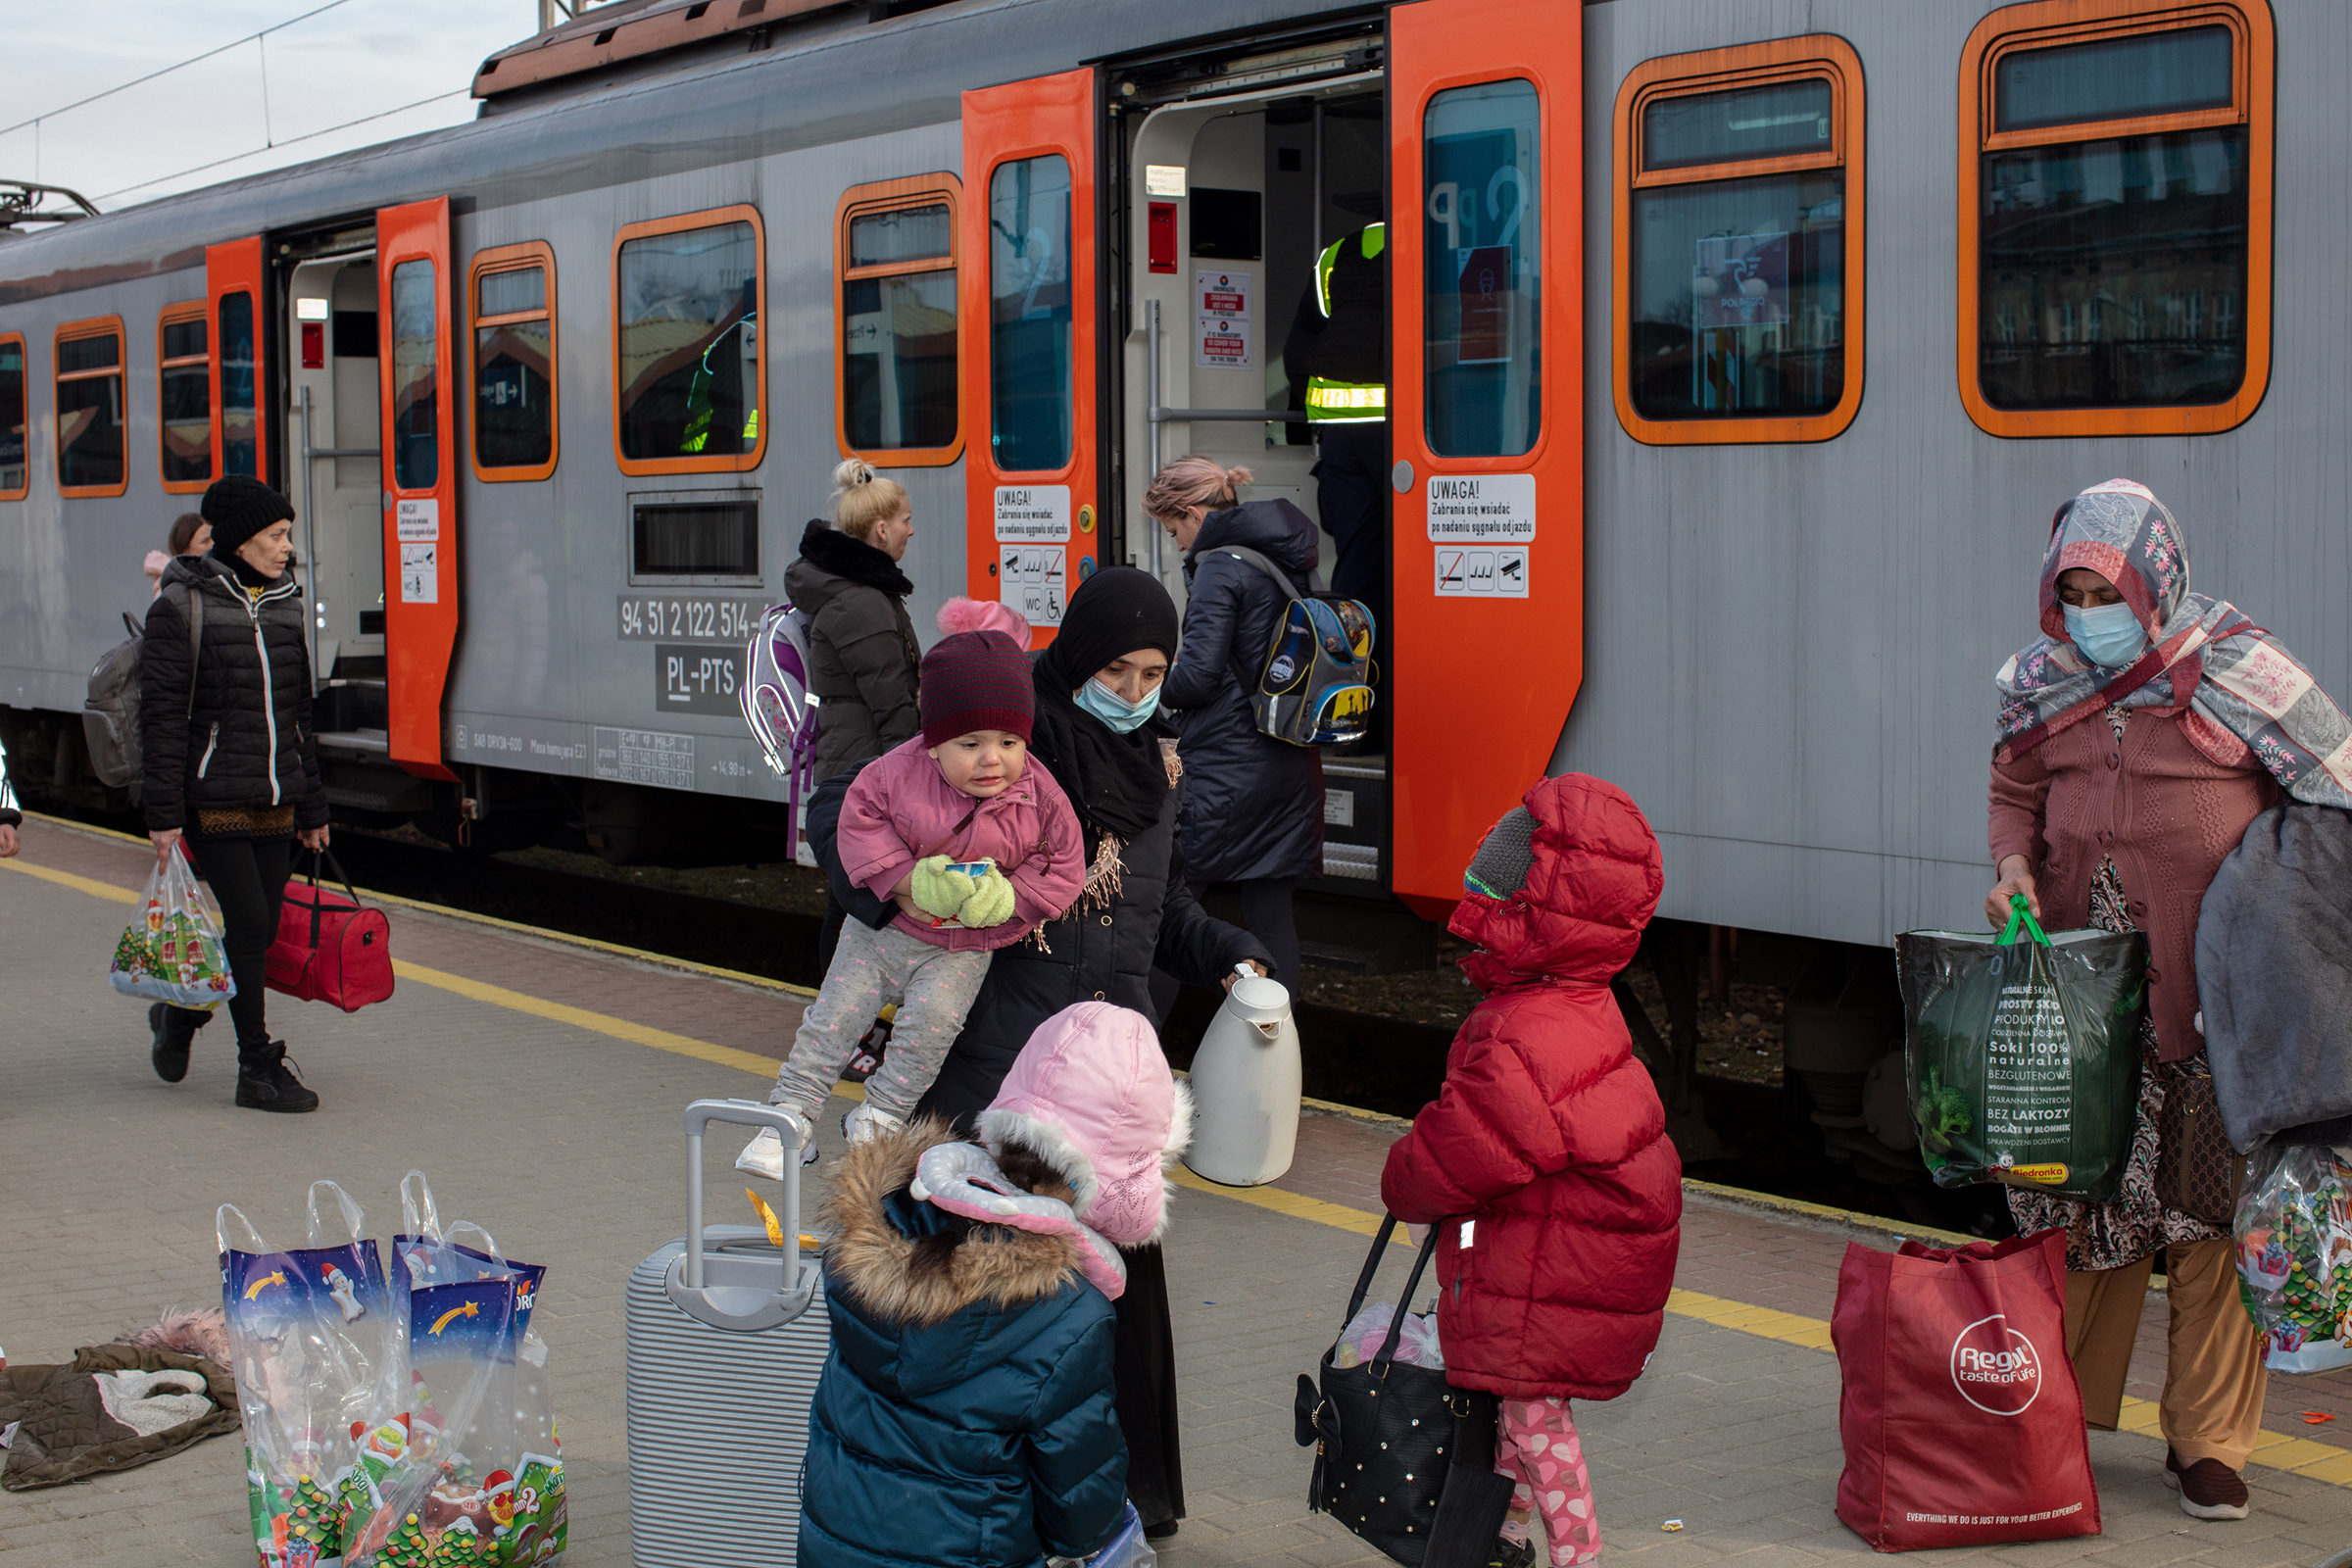 Refugees await transportation on the train platform in Przemysl, Poland, on March 1. (Natalie Keyssar for TIME)